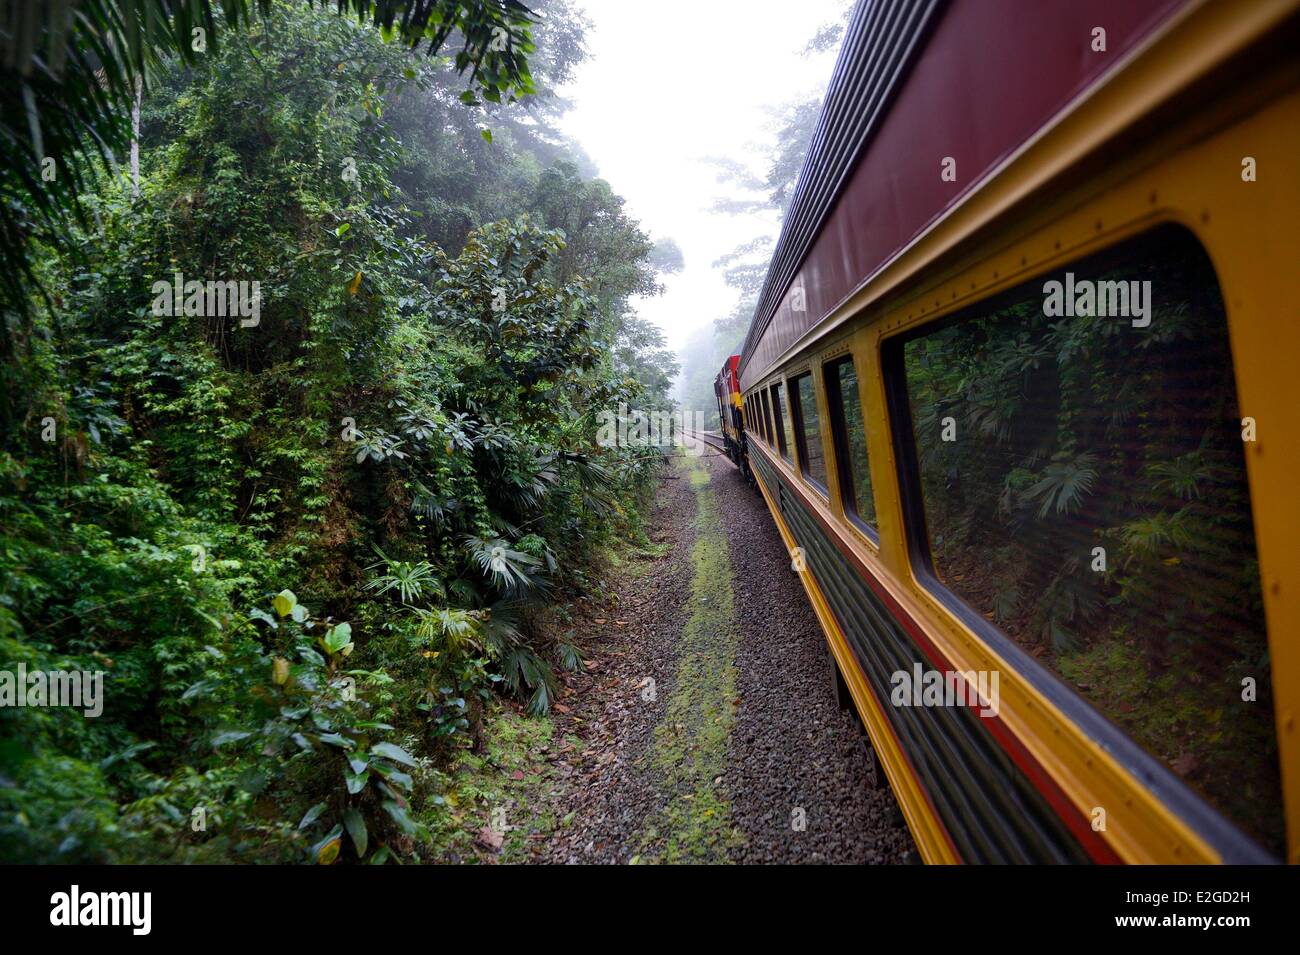 Panama Panama Canal Railway Historic Train which runs between Panama City & Colon along Panama Canal and passing through Isthmus Stock Photo